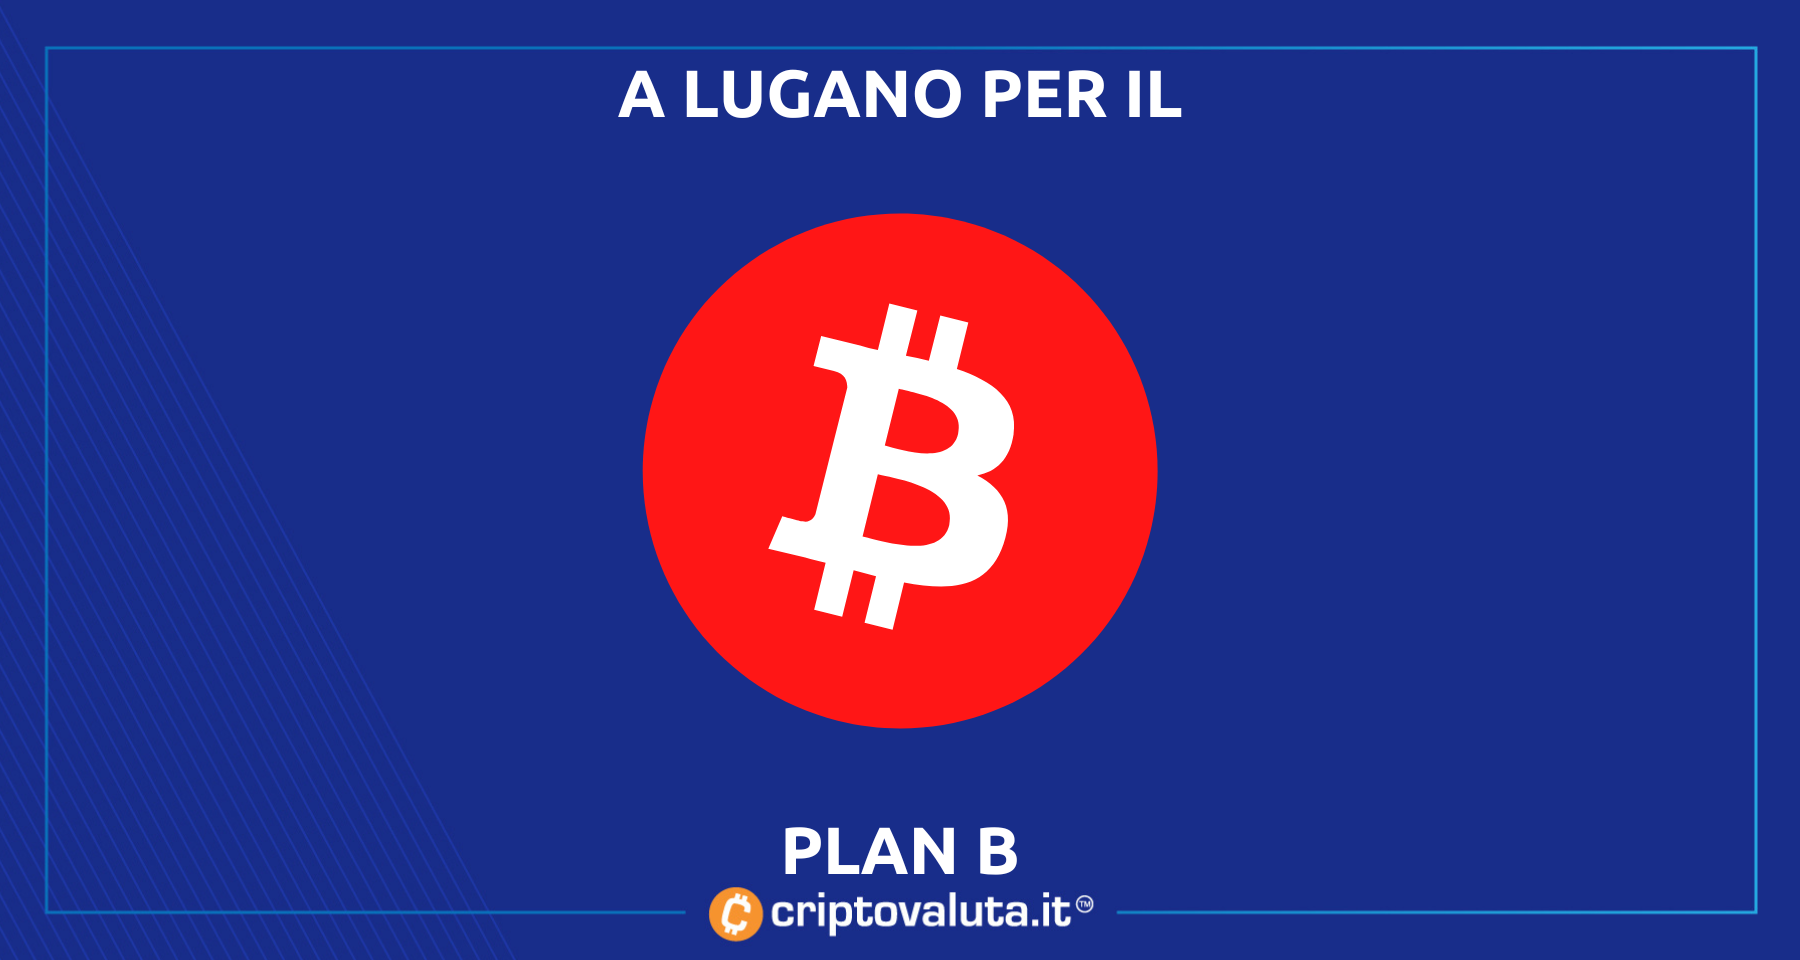 Lugano Plan B: Criptovaluta.it intervista i protagonisti | Punti salienti